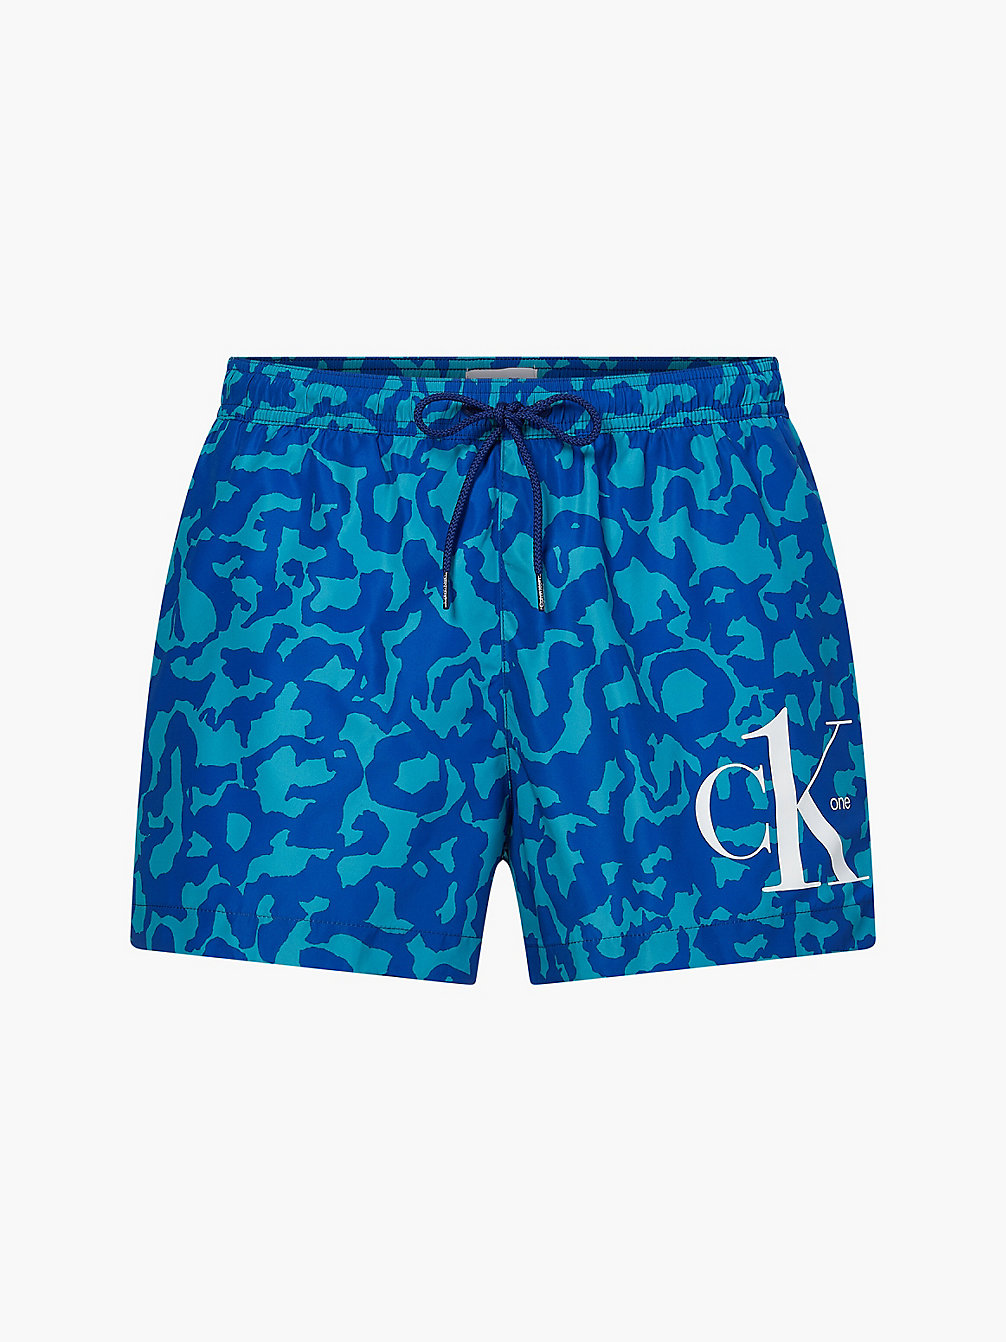 POISON FROG BLUE AOP Short Drawstring Swim Shorts - CK One undefined men Calvin Klein